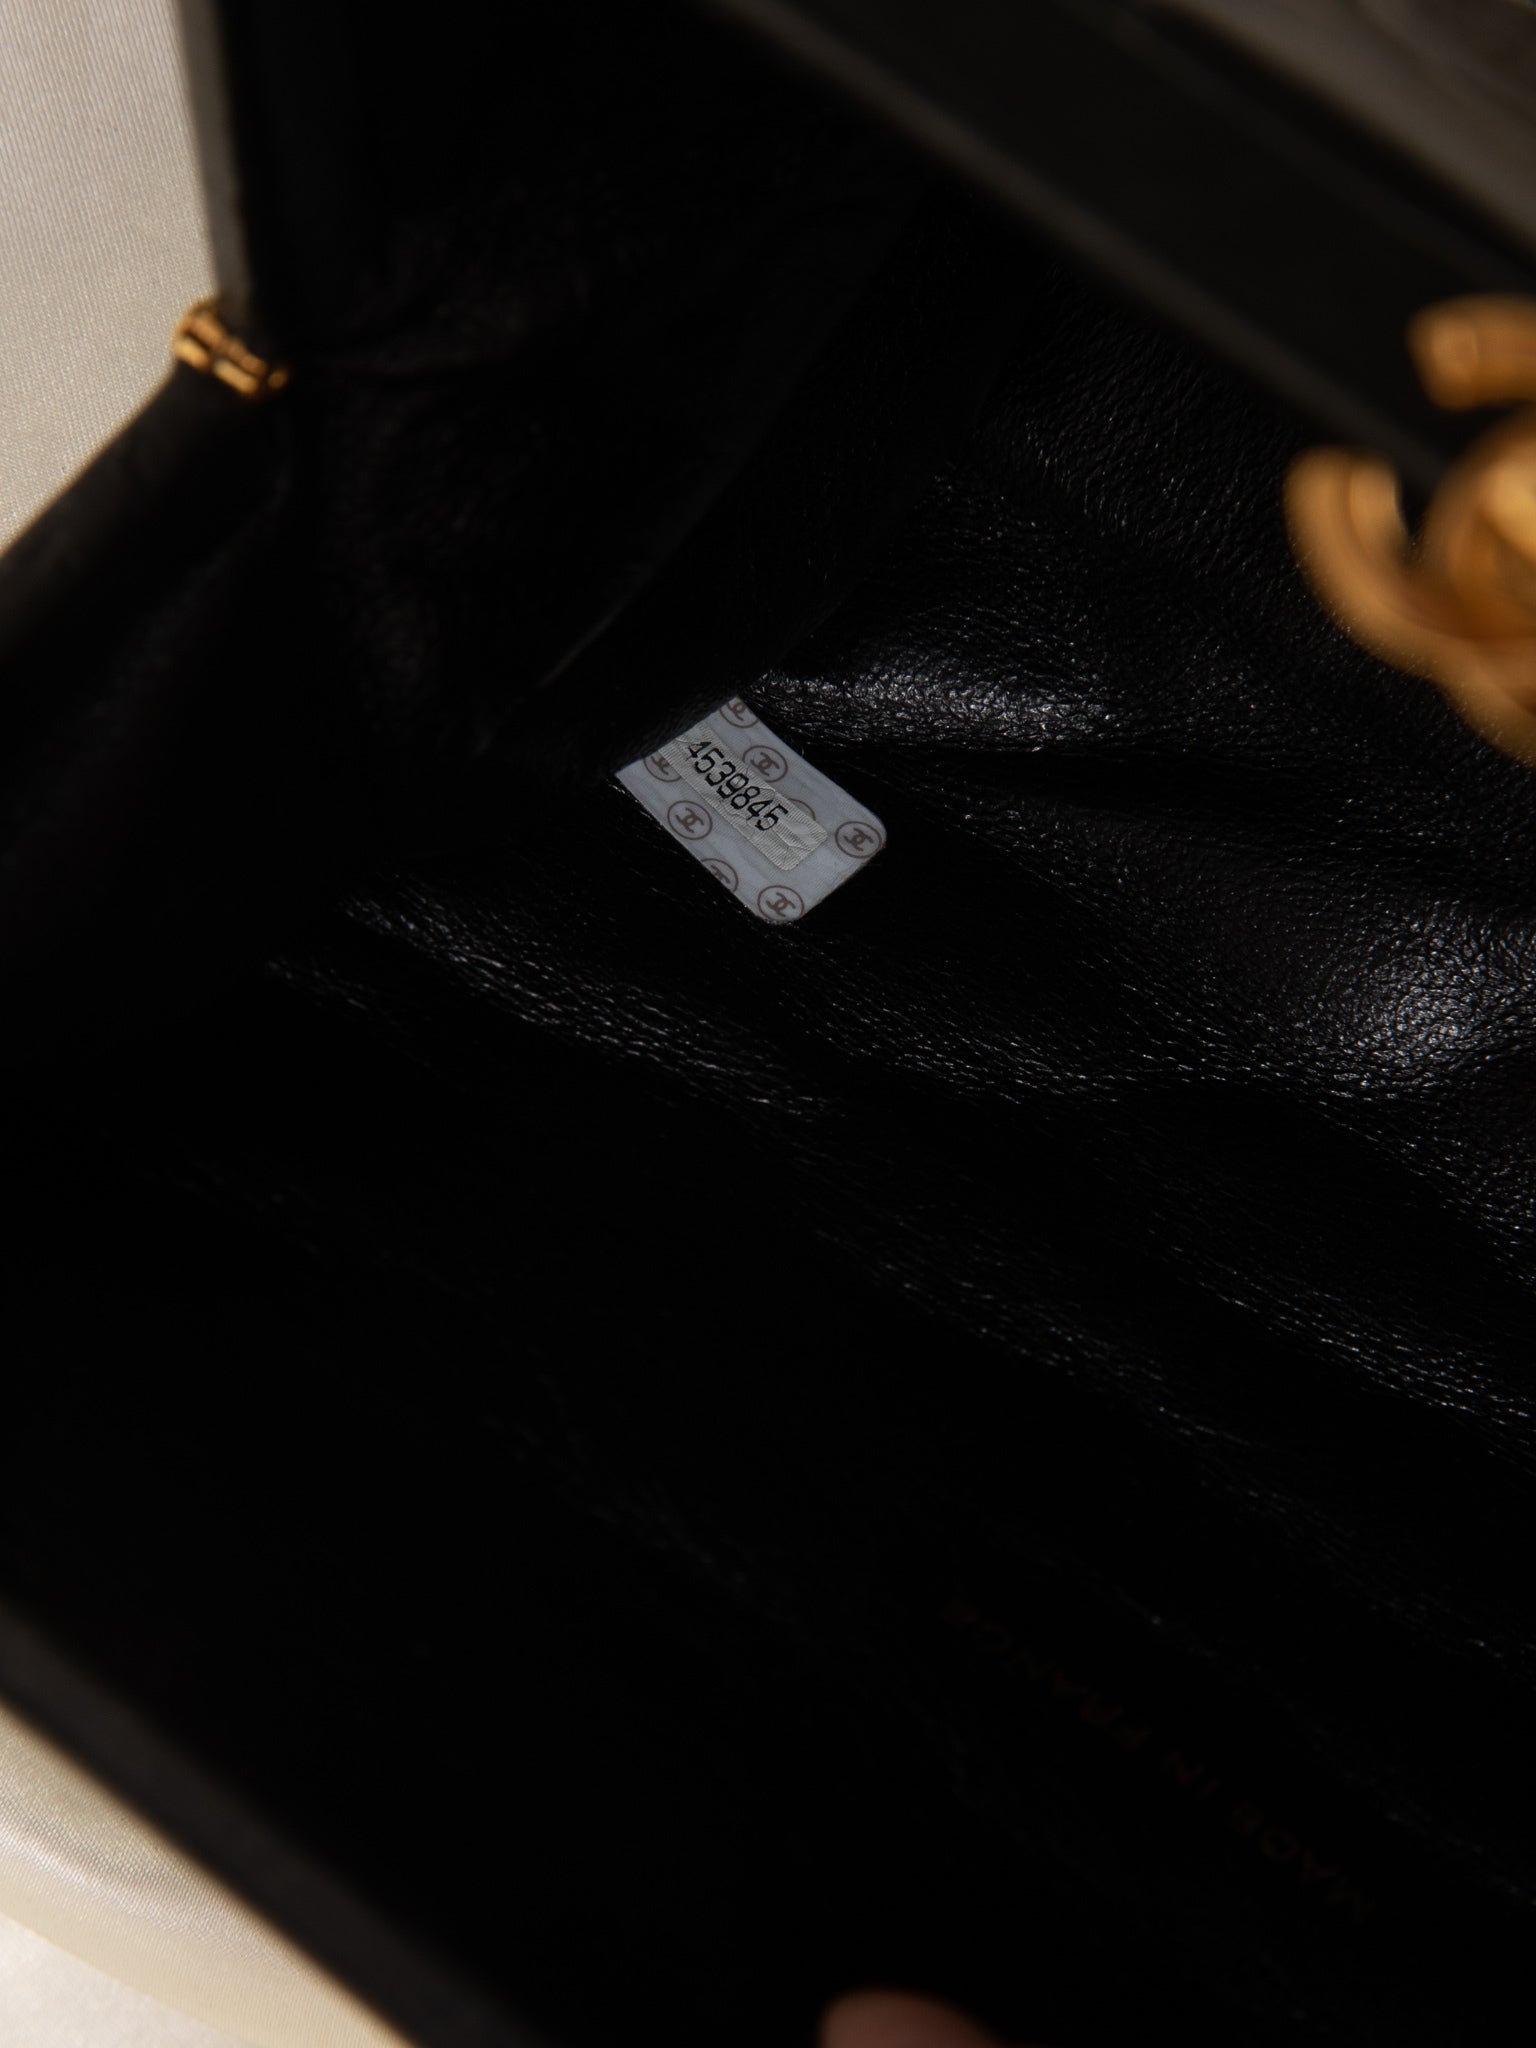 Rare Chanel Lambskin Mini Chain Bag